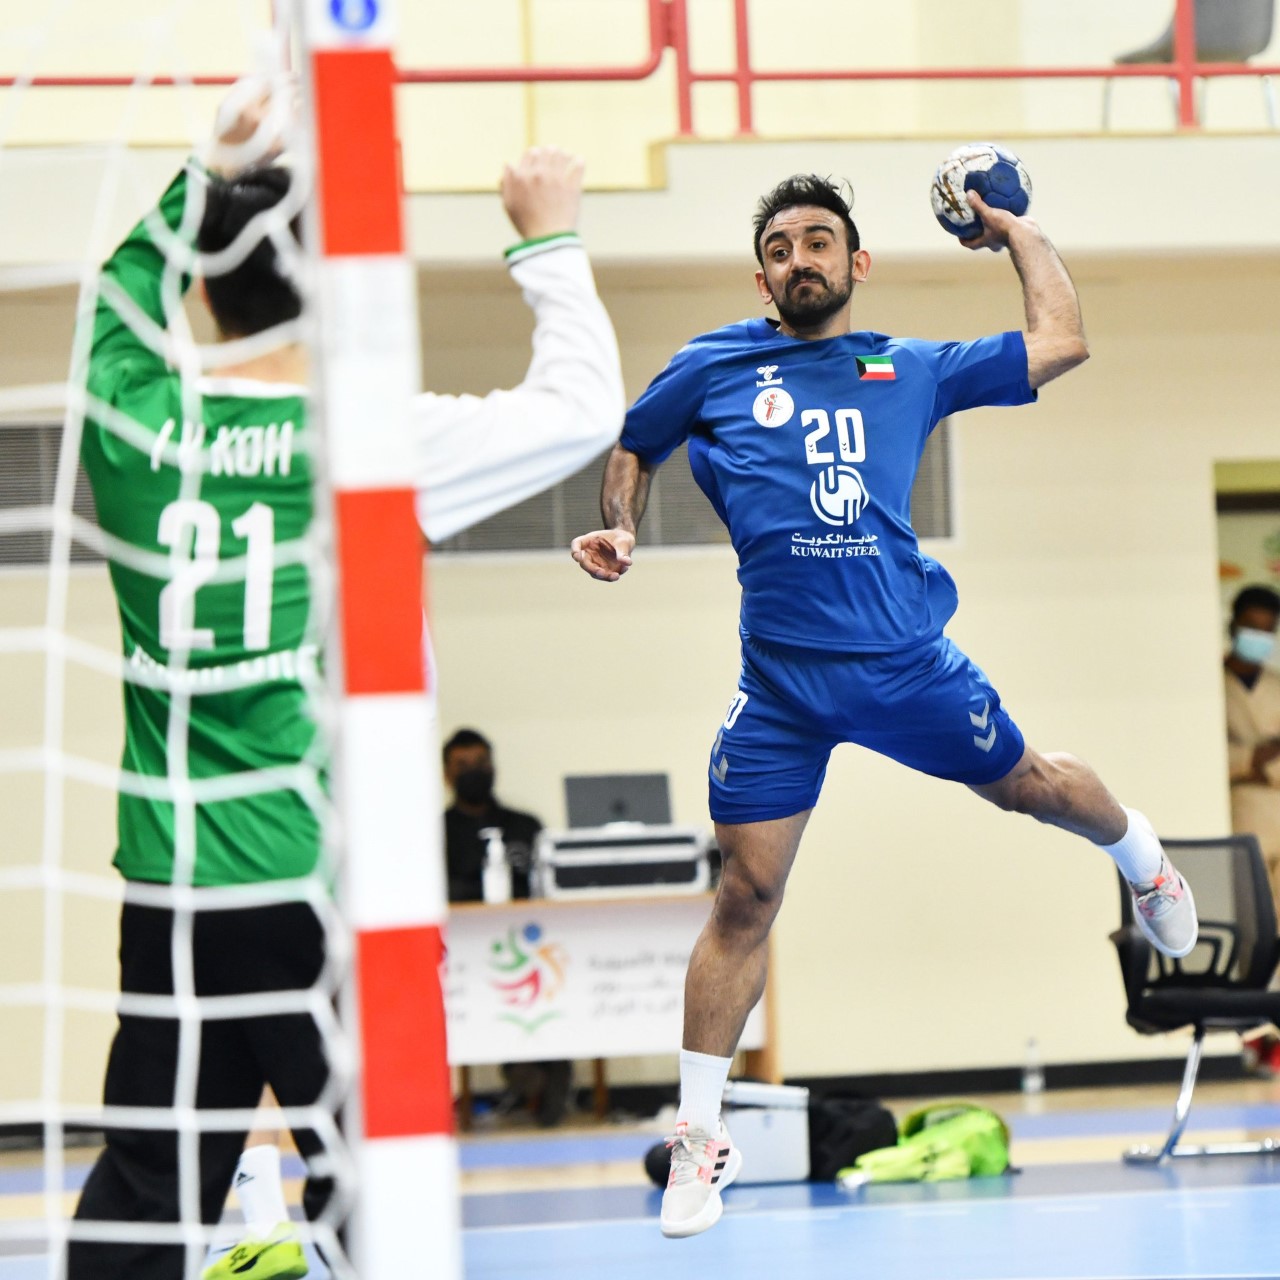 Kuwaiti handball team advance to next round of Asian handball championship